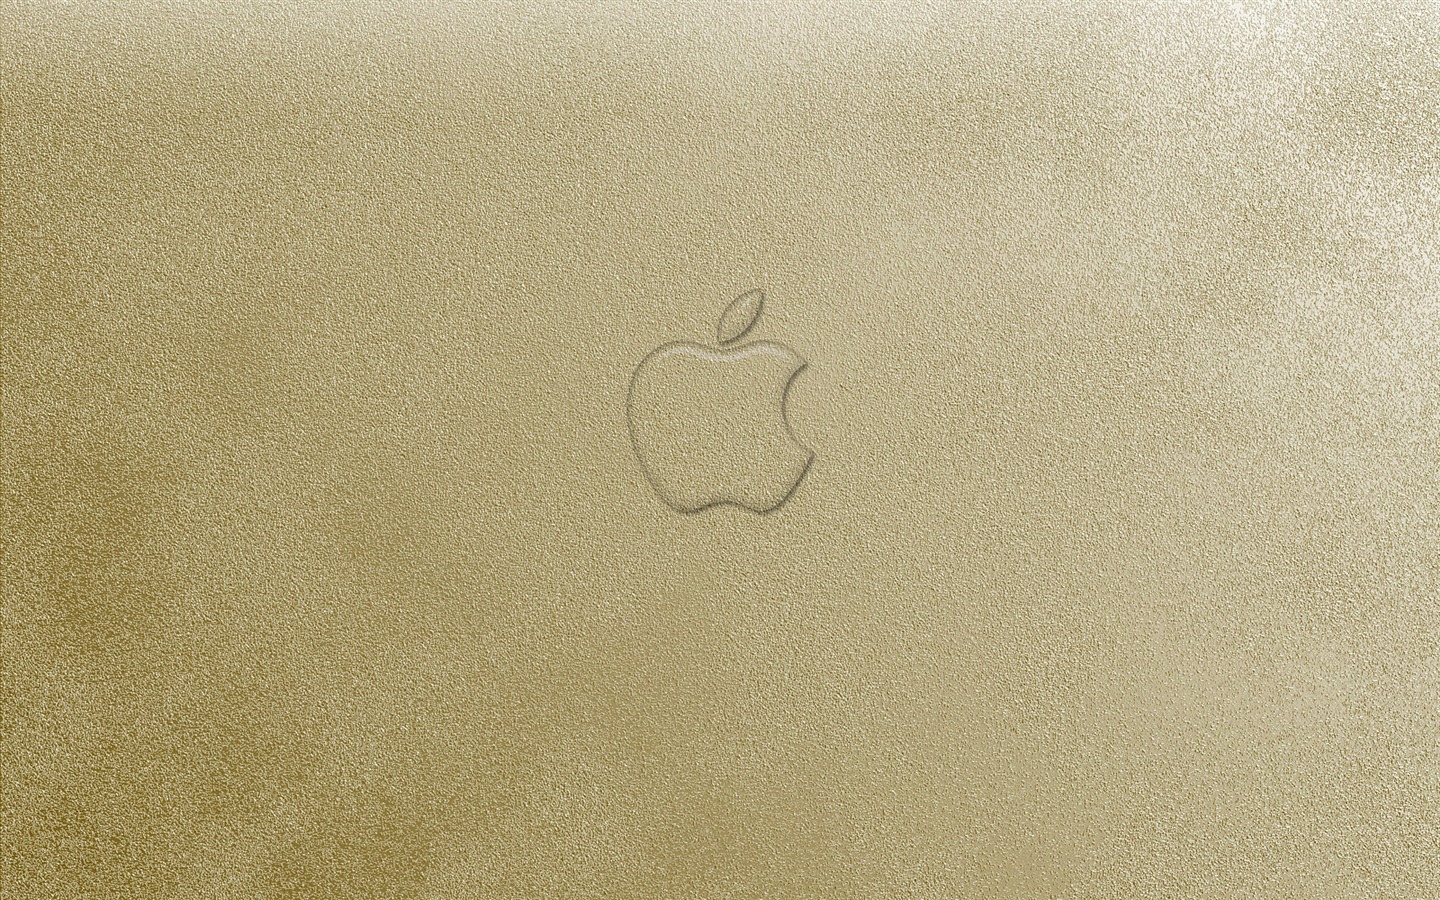 Apple theme wallpaper album (27) #15 - 1440x900